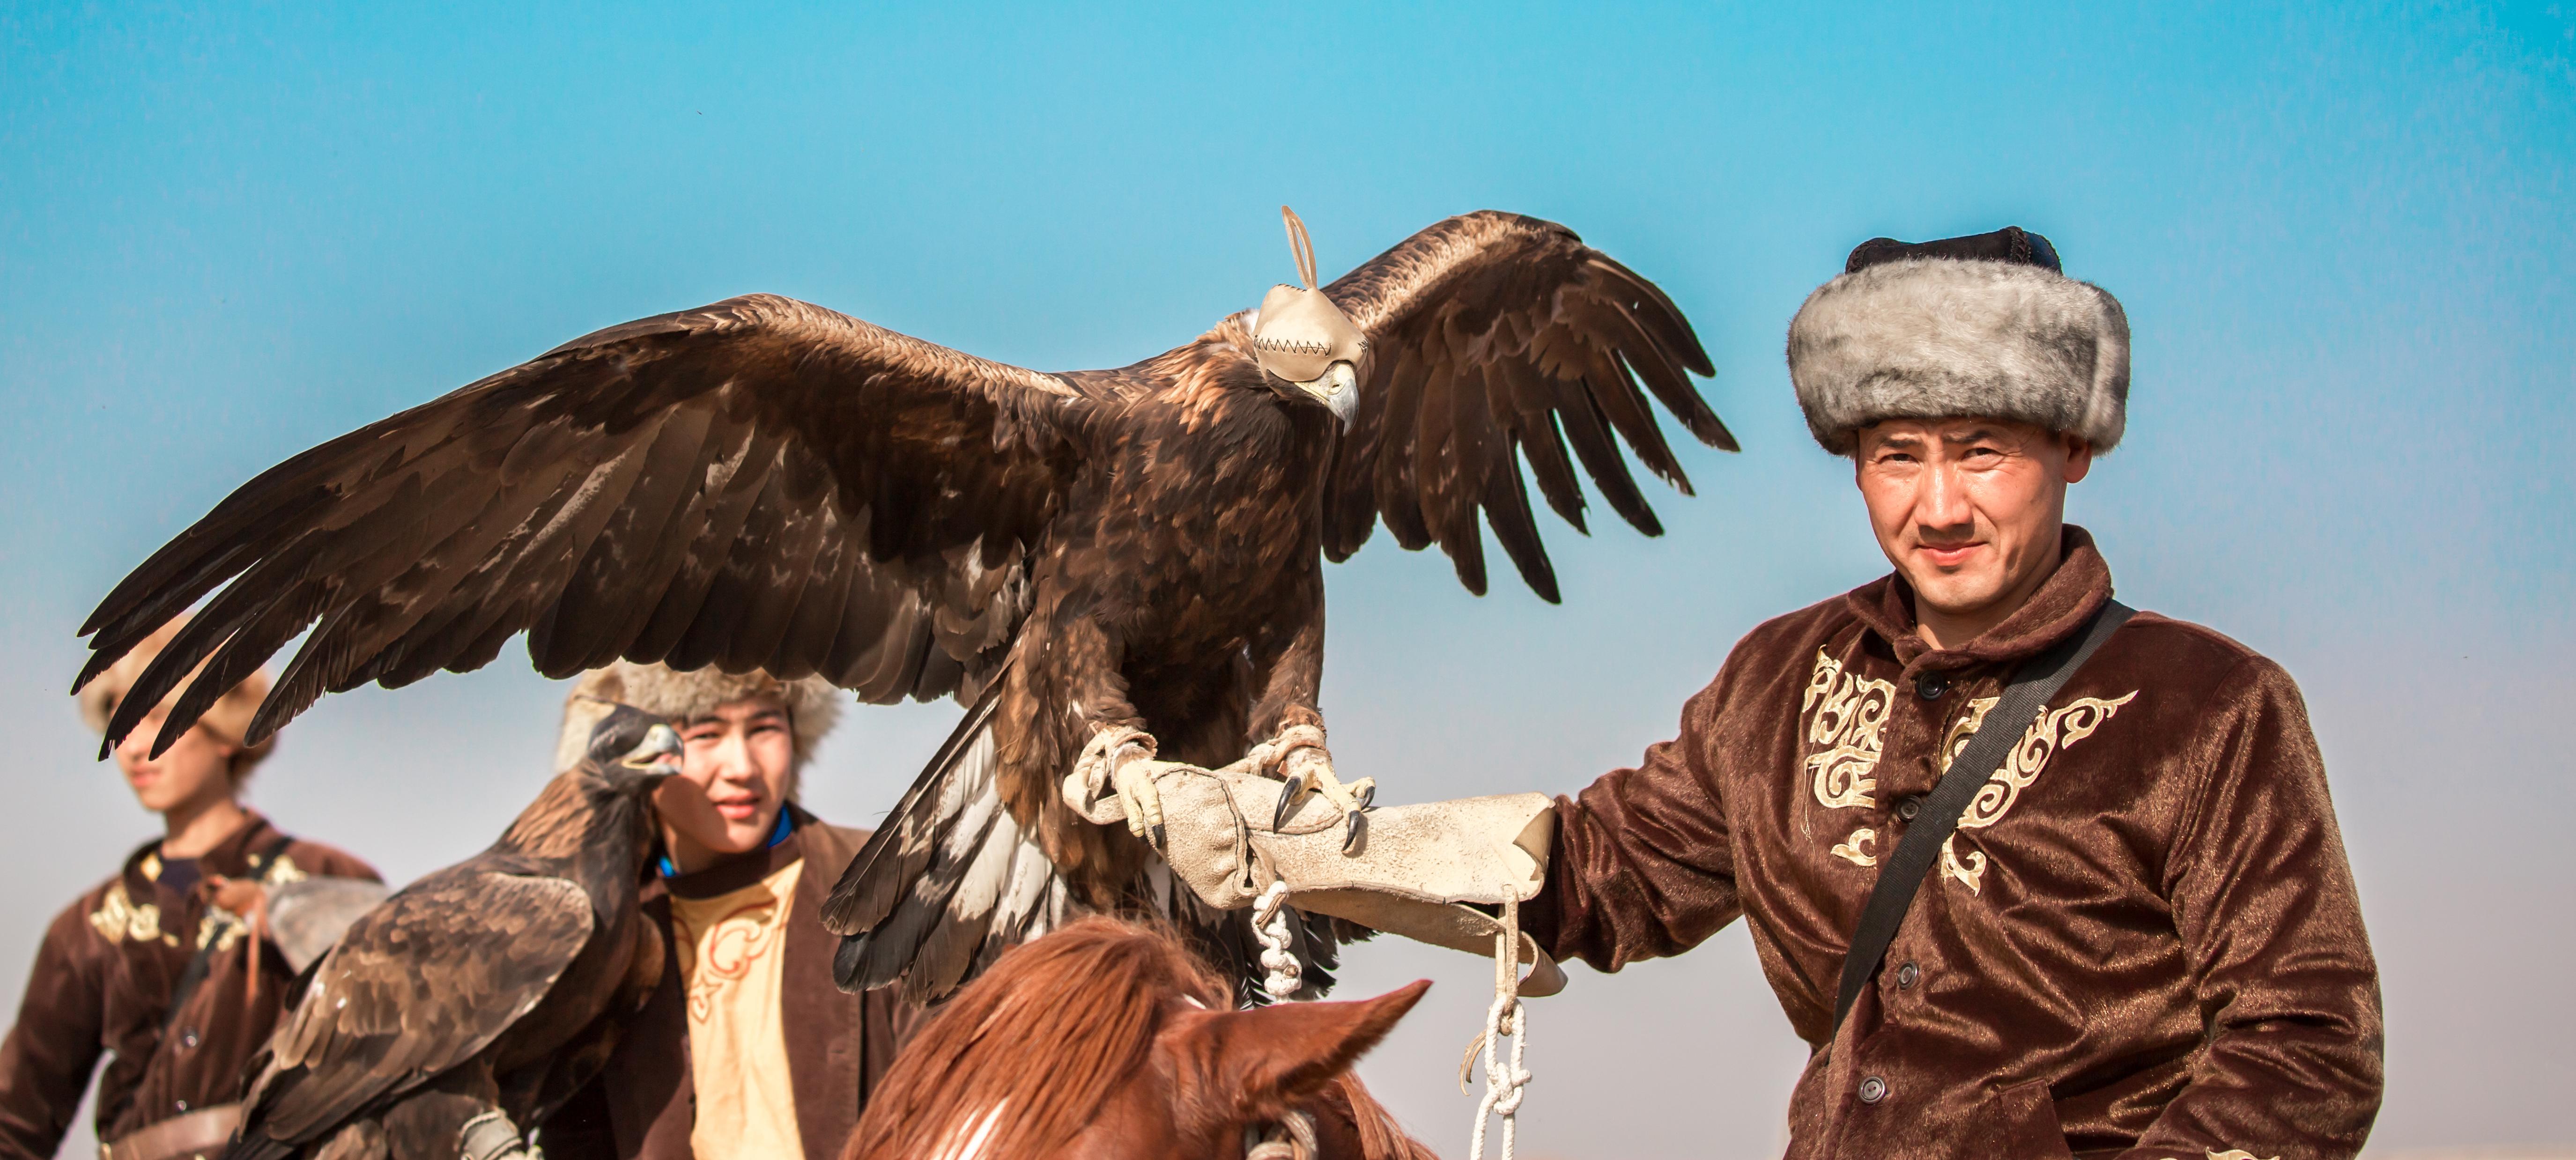 Golden Eagle Festival in Kazakhstan © Vera Larina / Shutterstock